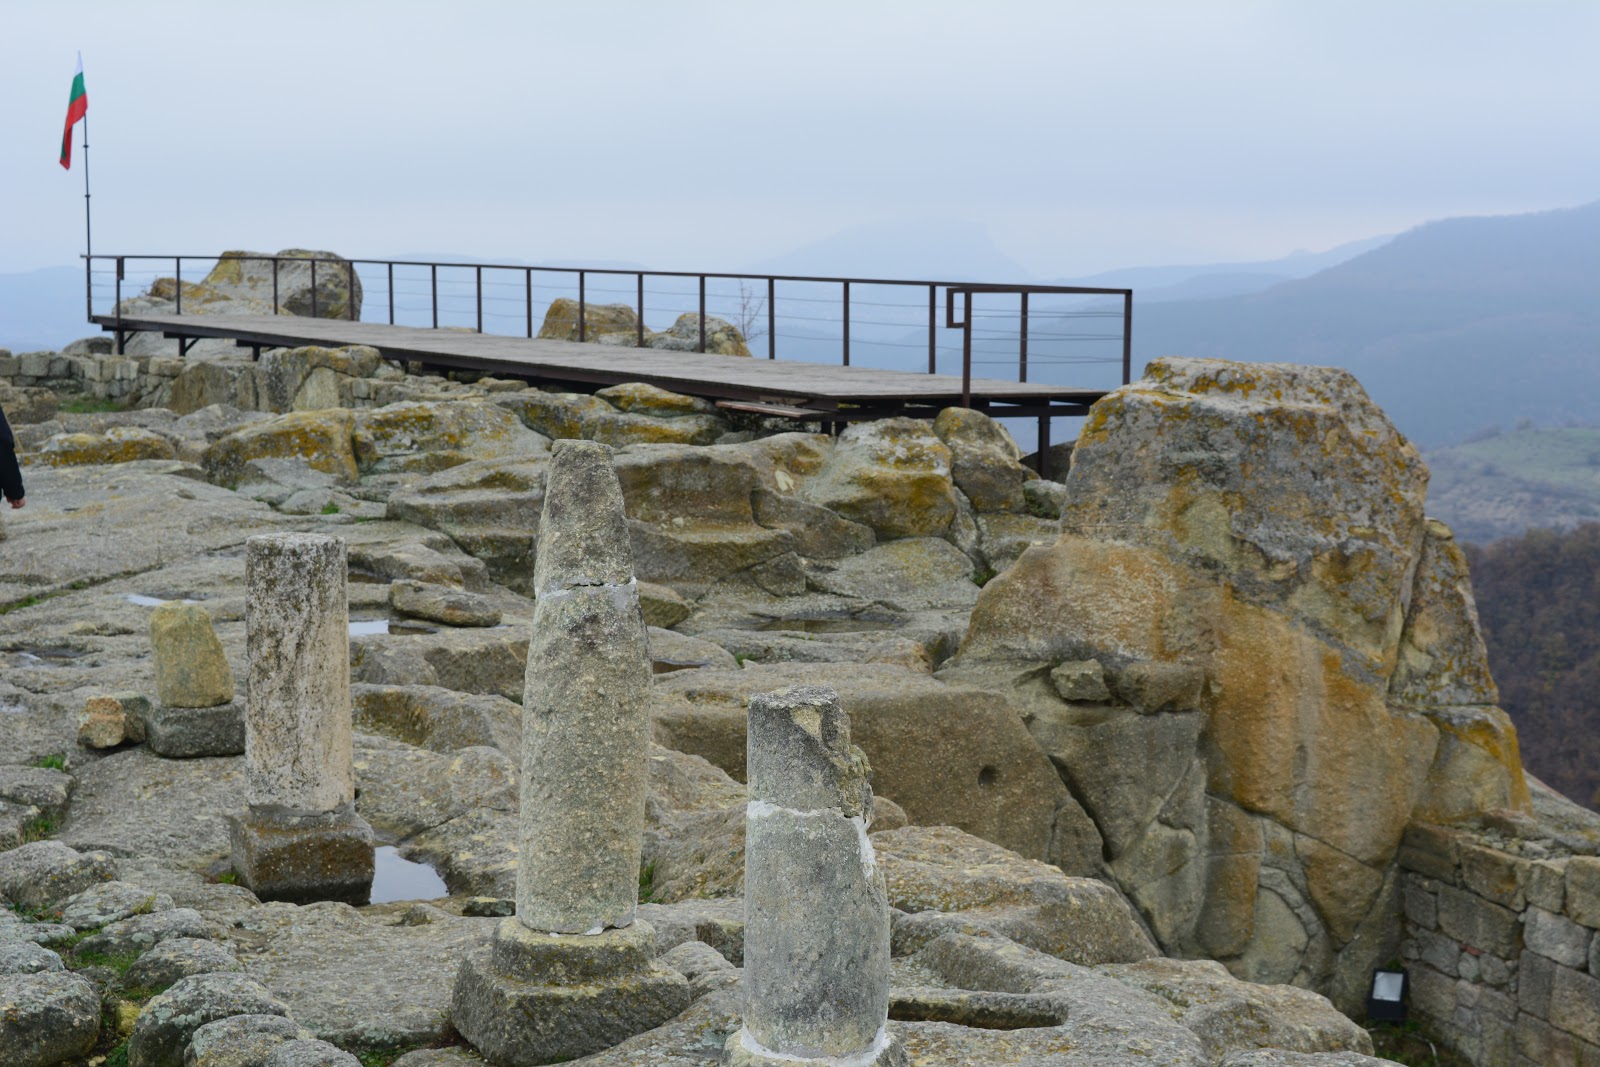 Lookout platform high in rocky hills